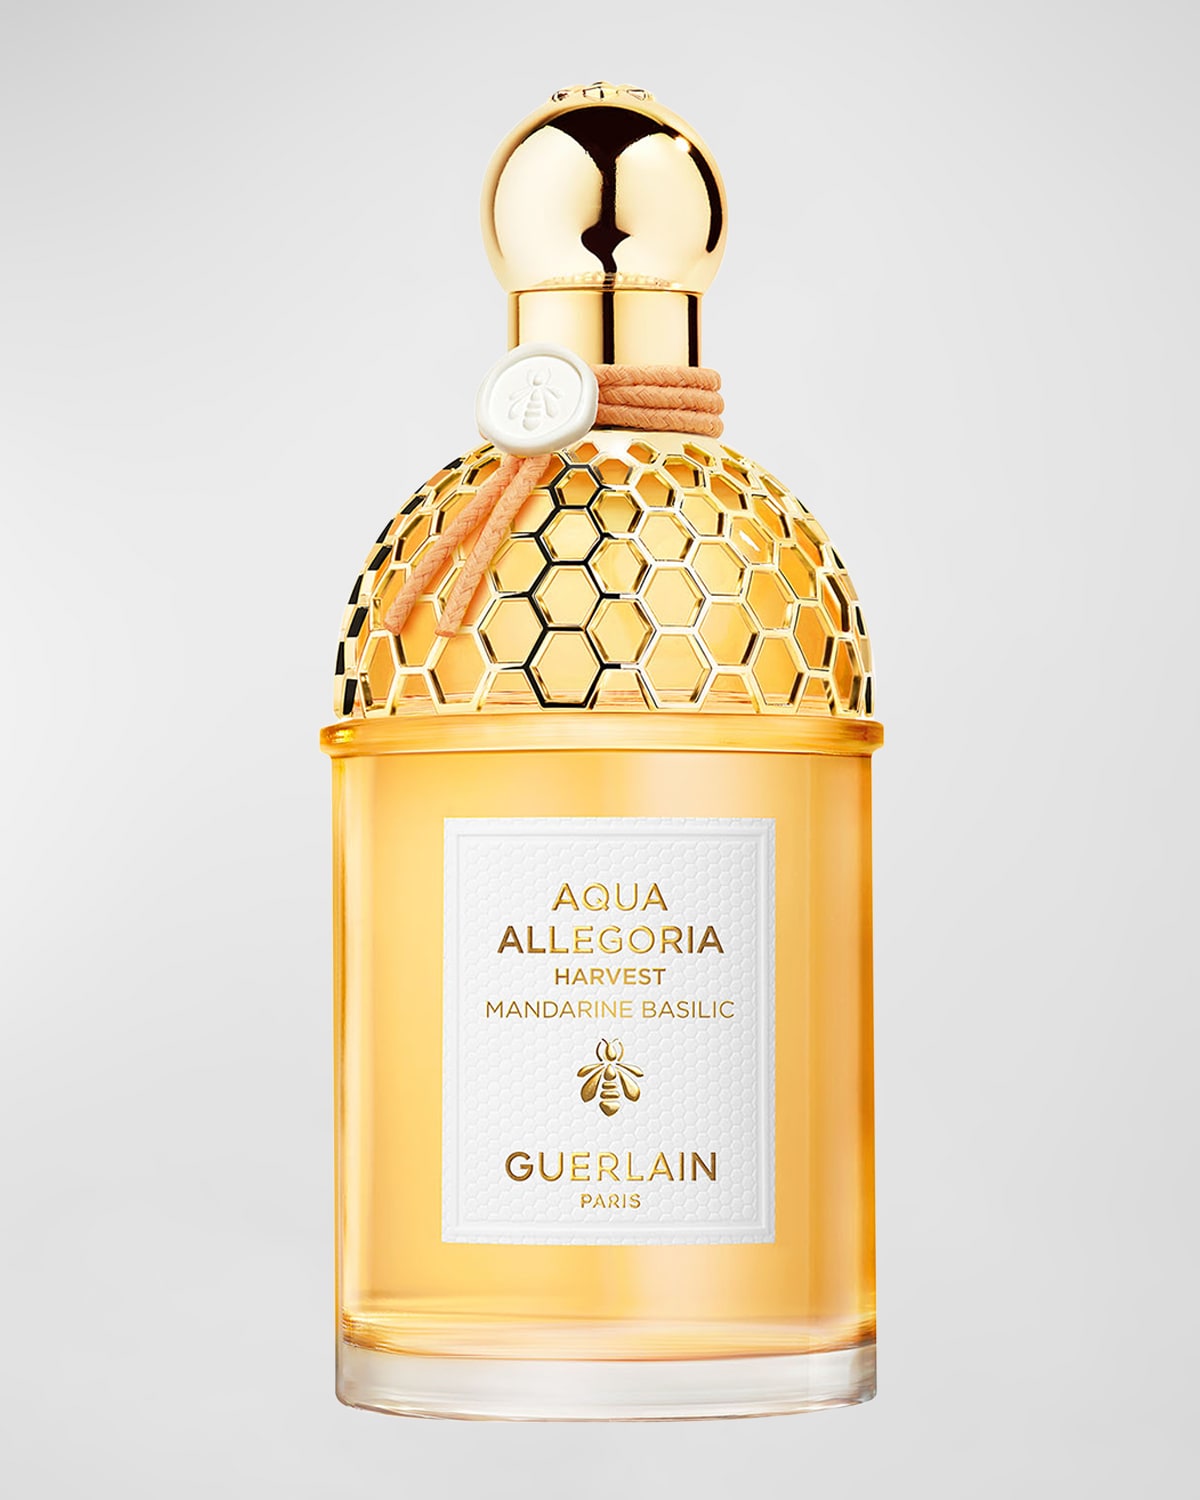 Guerlain Aqua Allegoria Harvest Mandarine Basilic Eau De Toilette, 4.2 Oz. - Limited Edition In Yellow